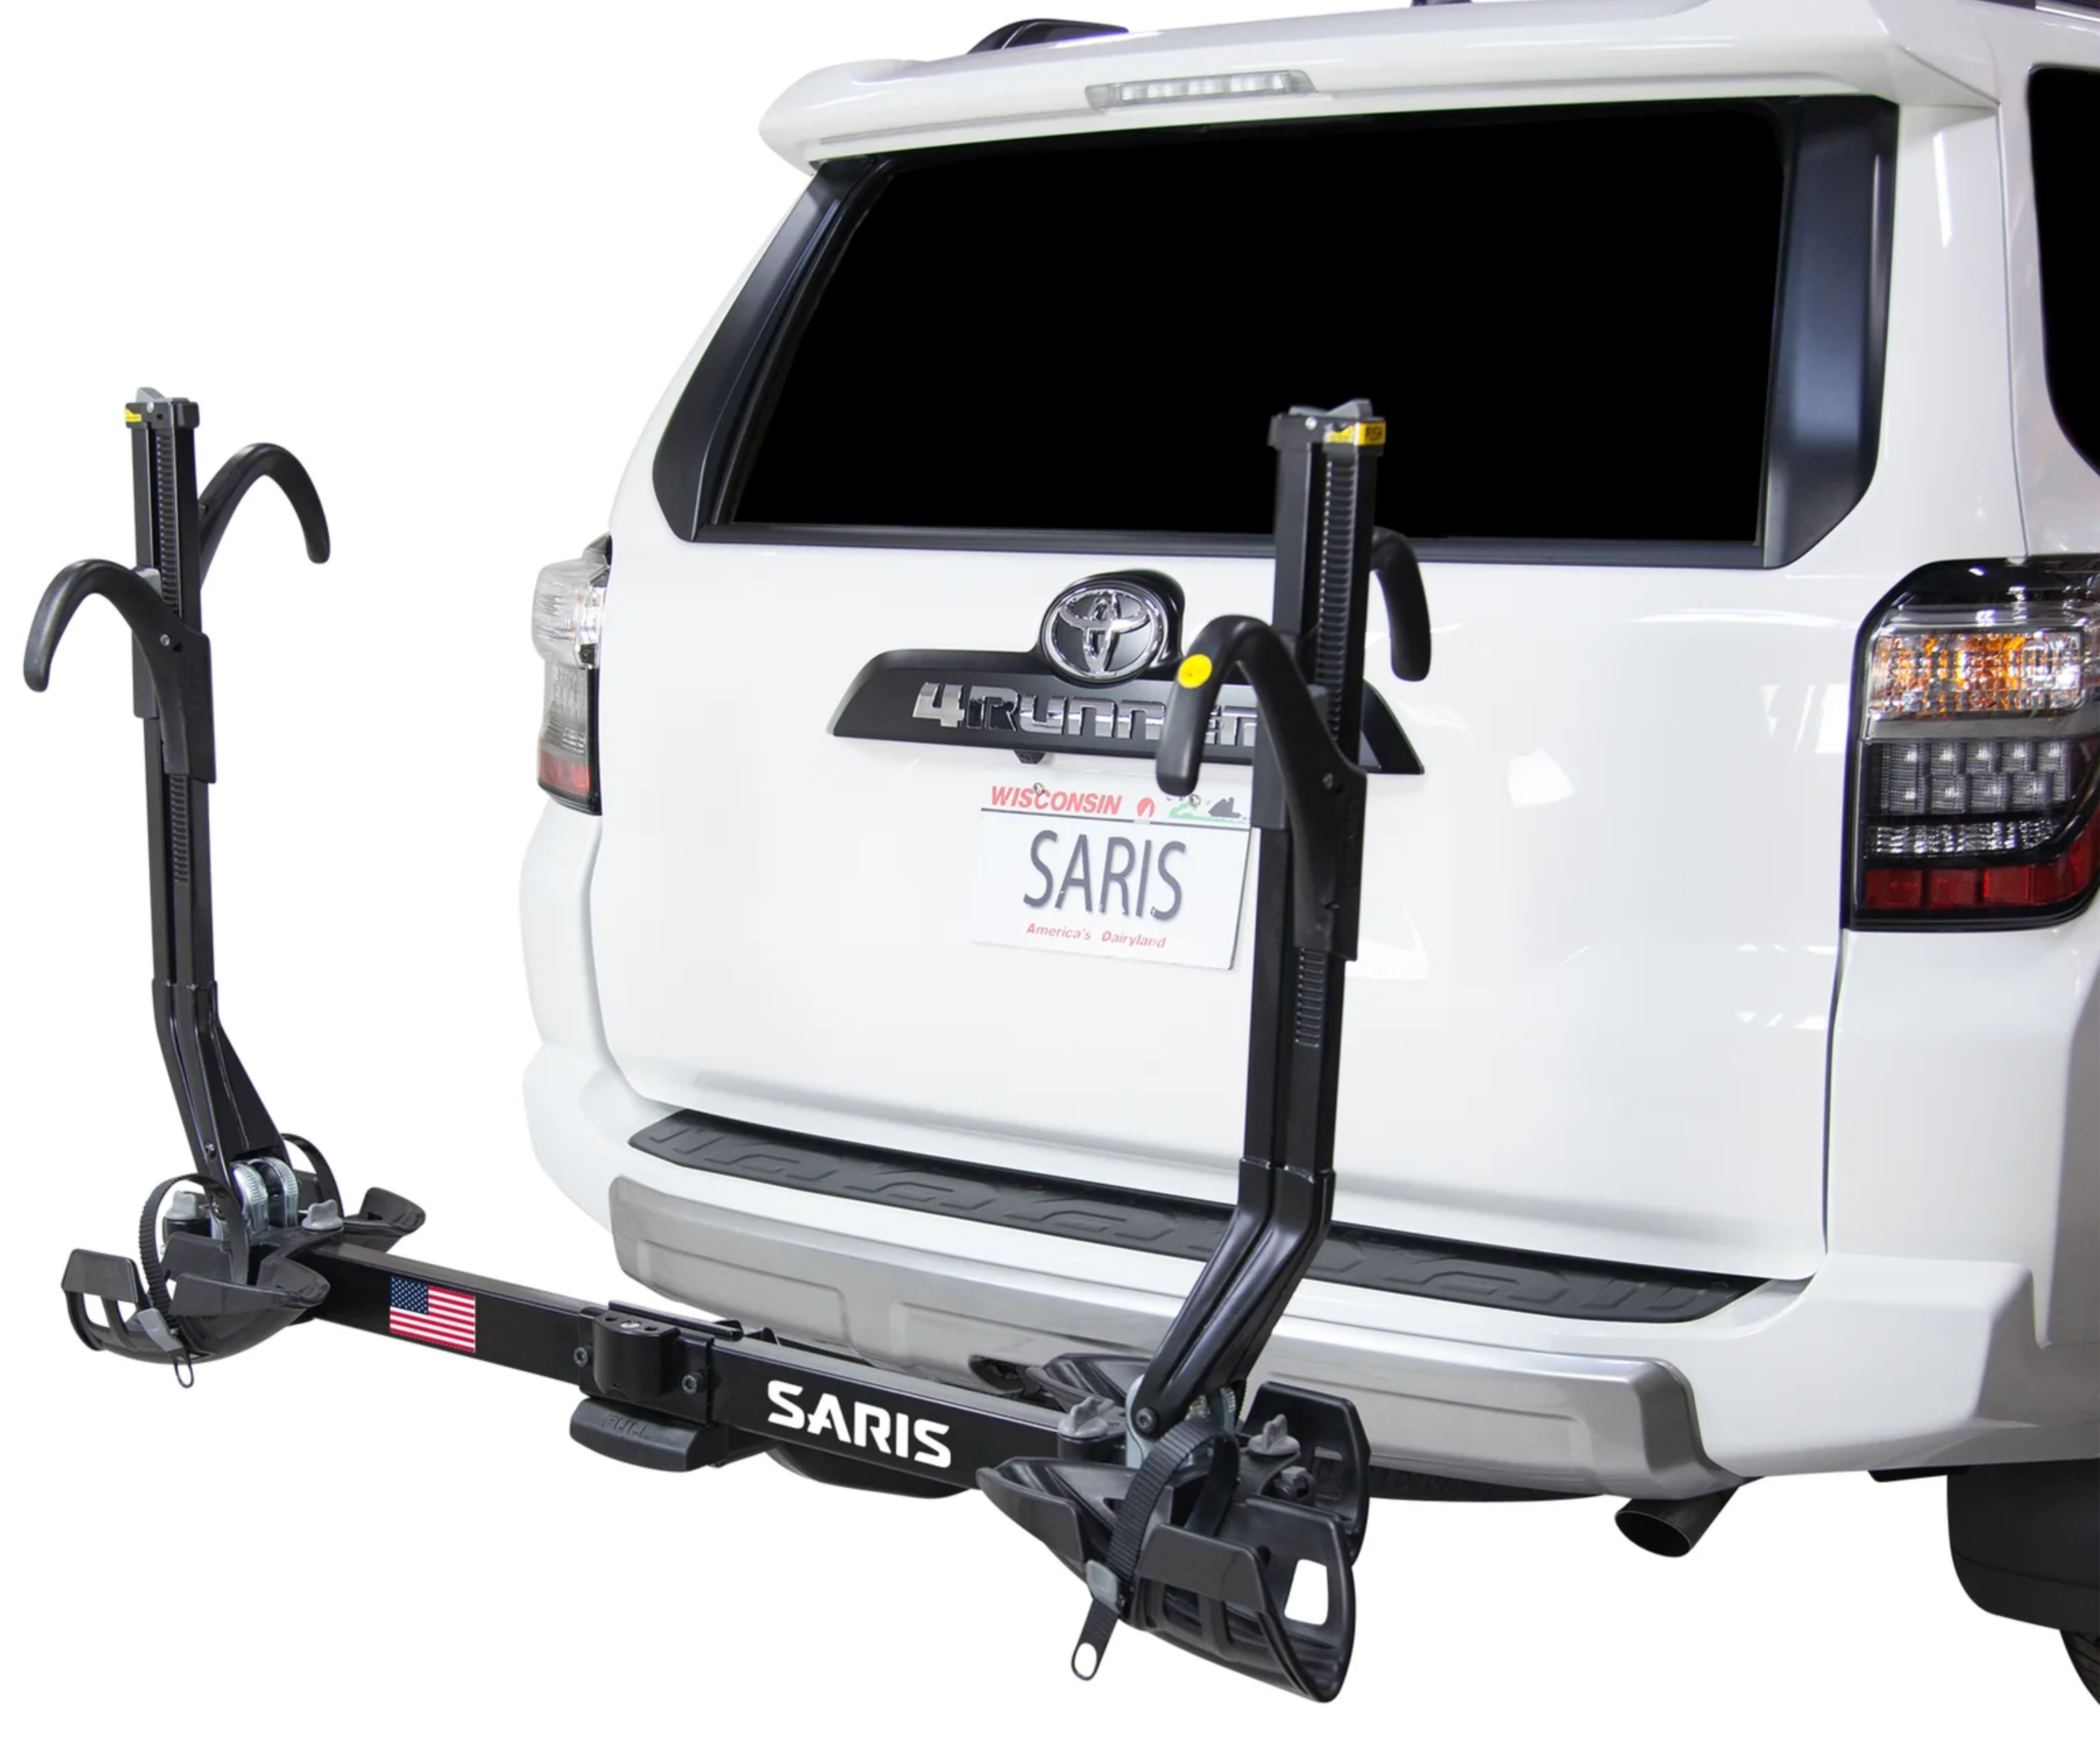 Saris Superclamp EX 2 Bike Hitch Rack